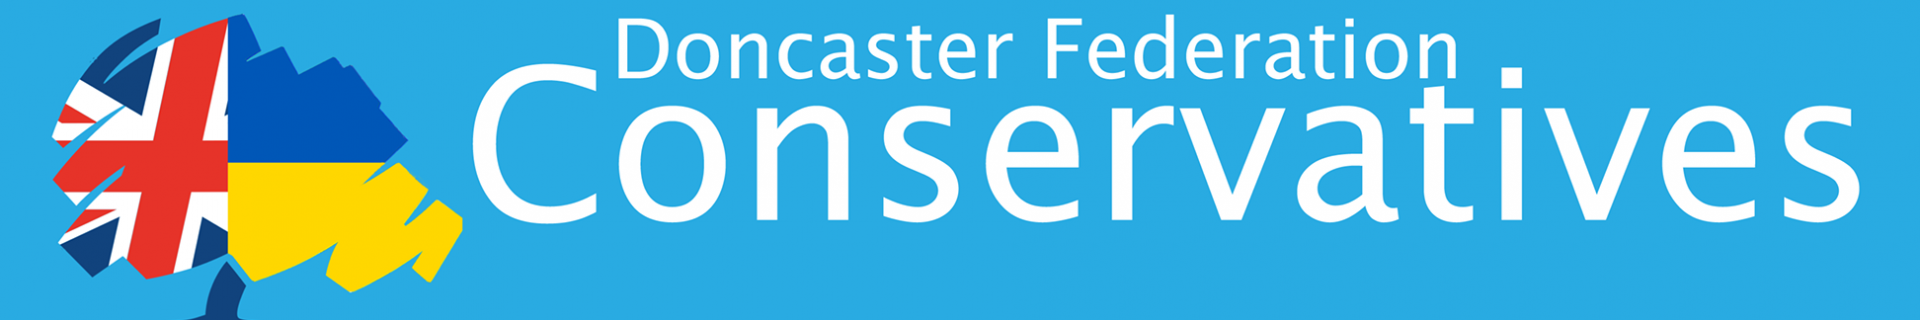 Council Tax Freeze Doncaster Conservative Federation